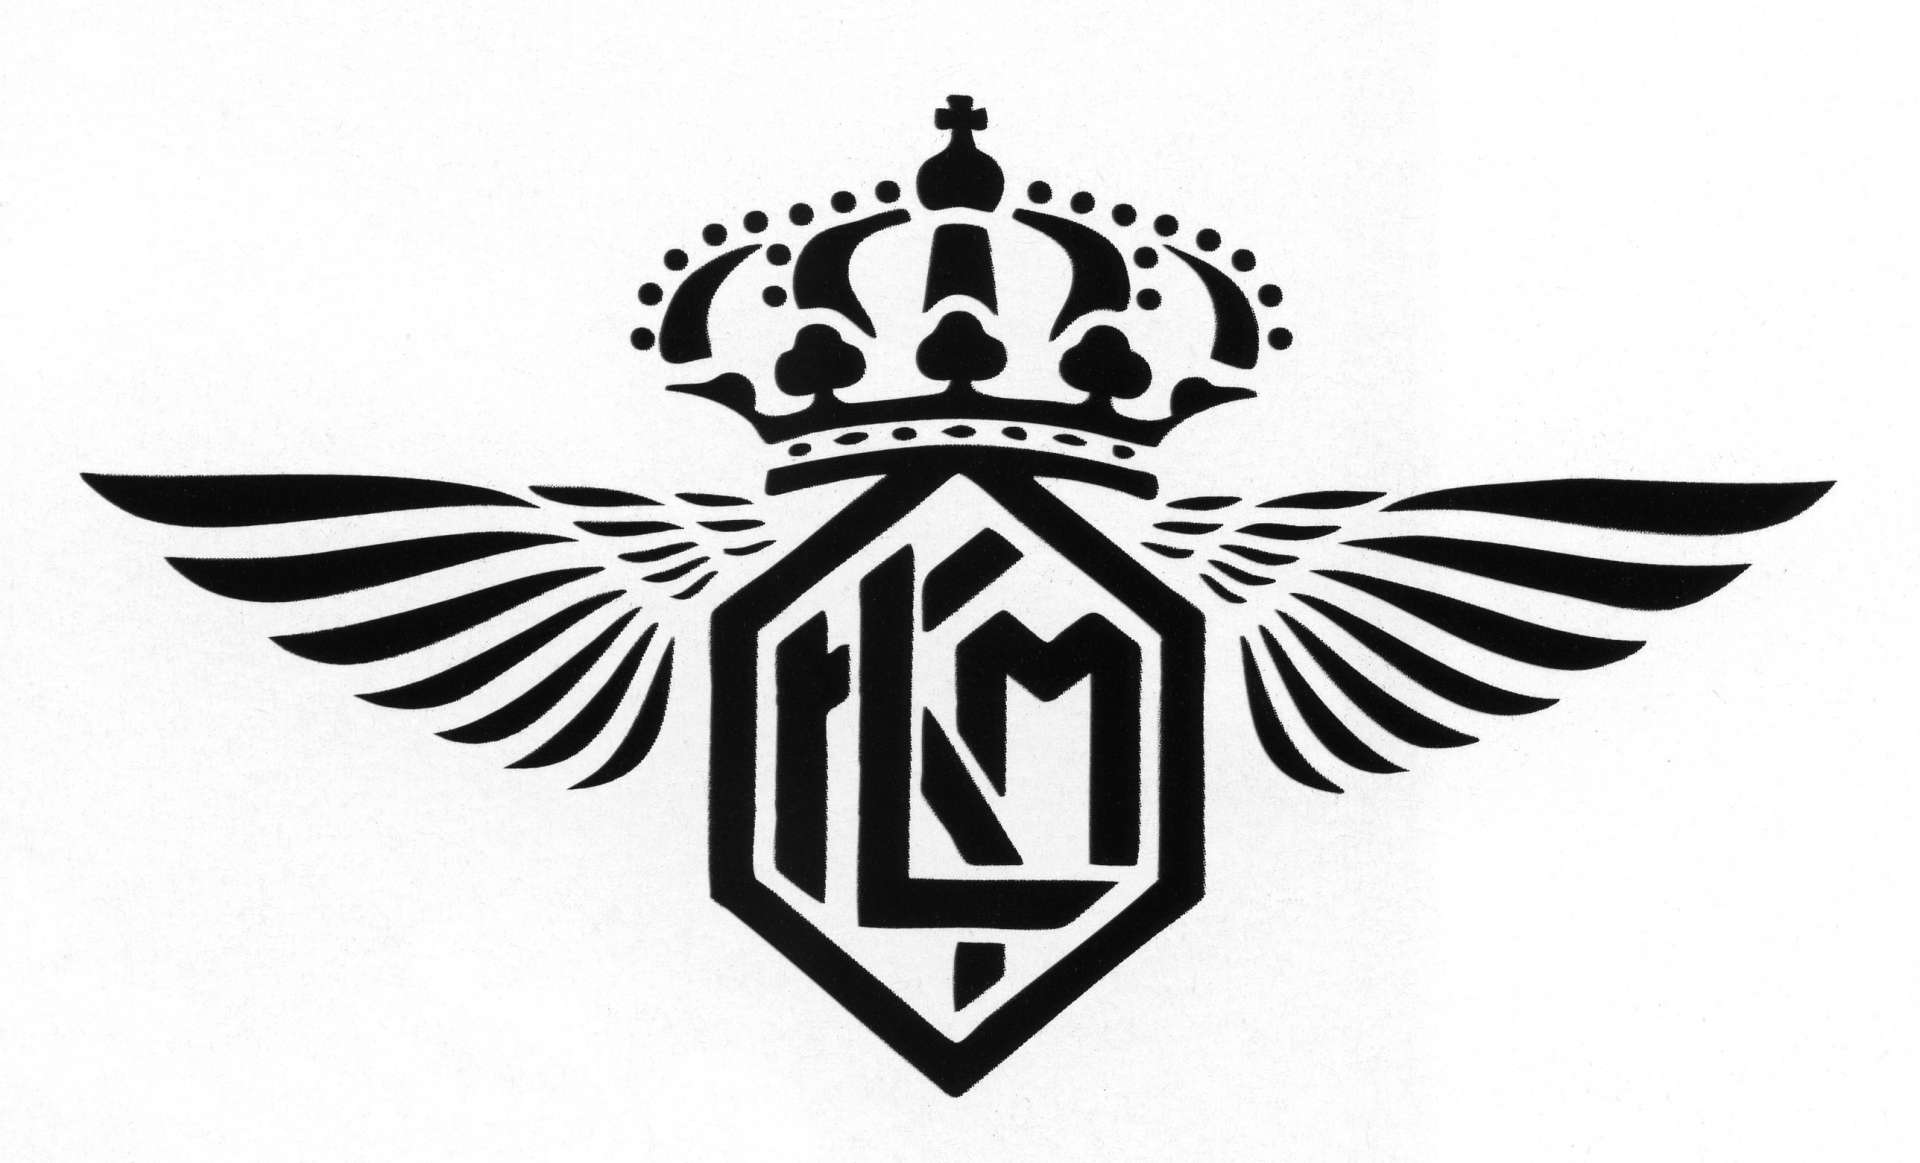 Klm Logo - A Strong and Lasting Logo - KLM Blog